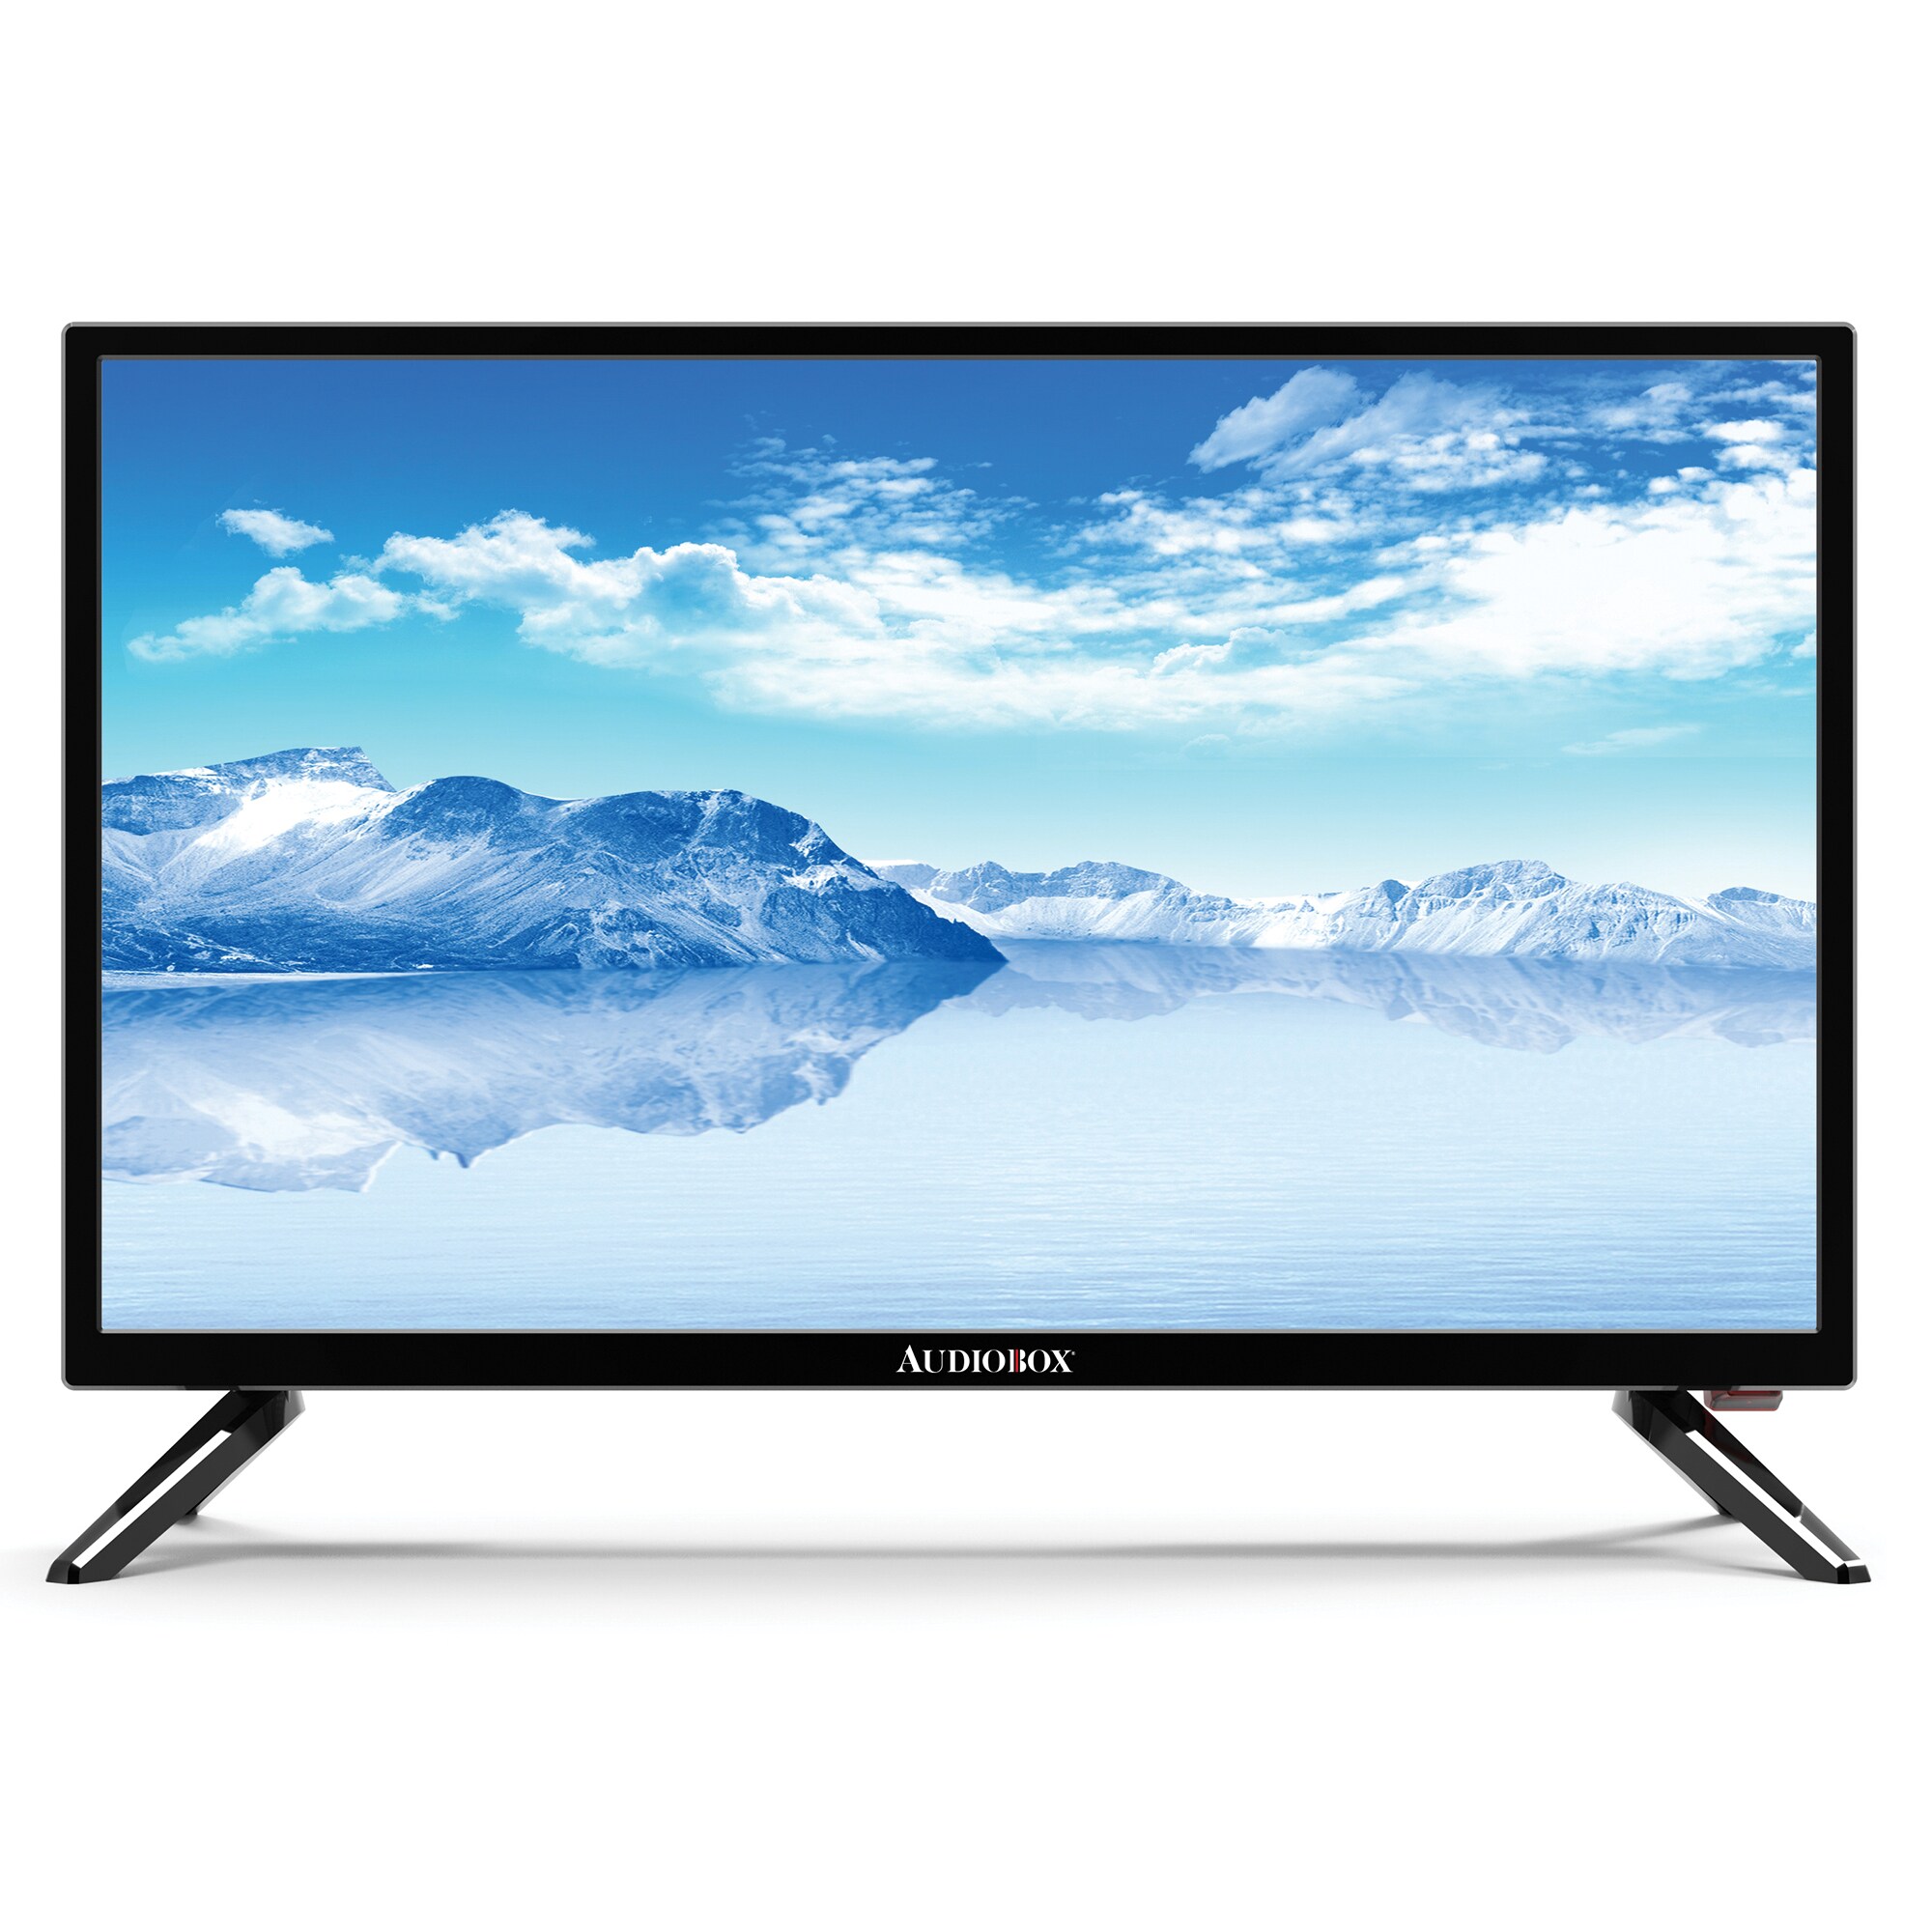 Televisor Samsung FLAT LED Smart TV 32 pulgadas HD / 1.366 x 768